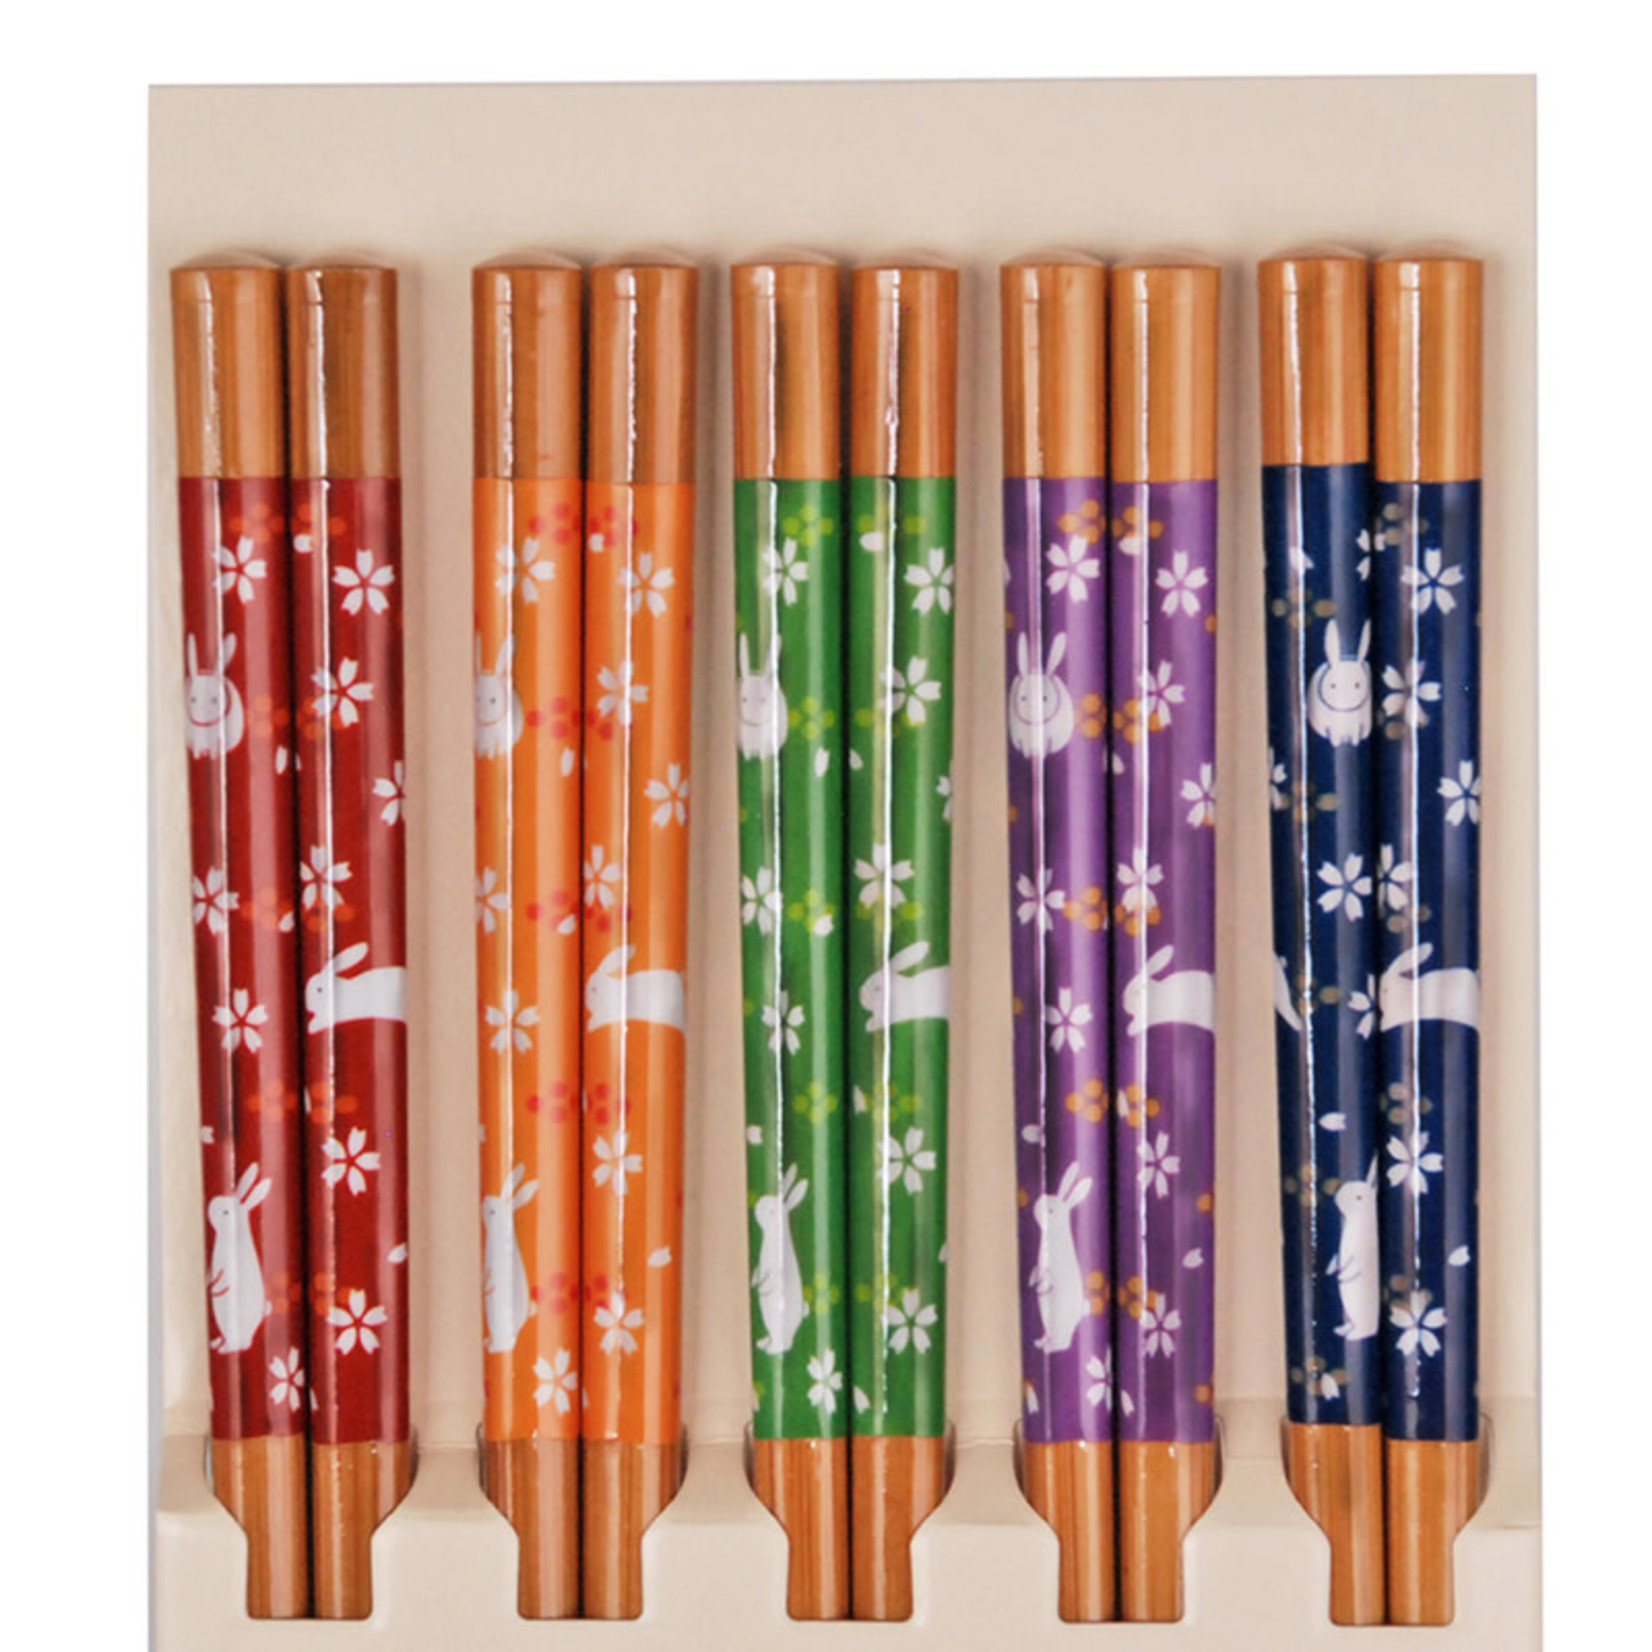 Irodori Wazen Usagi (Rabbit) Chopsticks Set (5 pairs) 519515